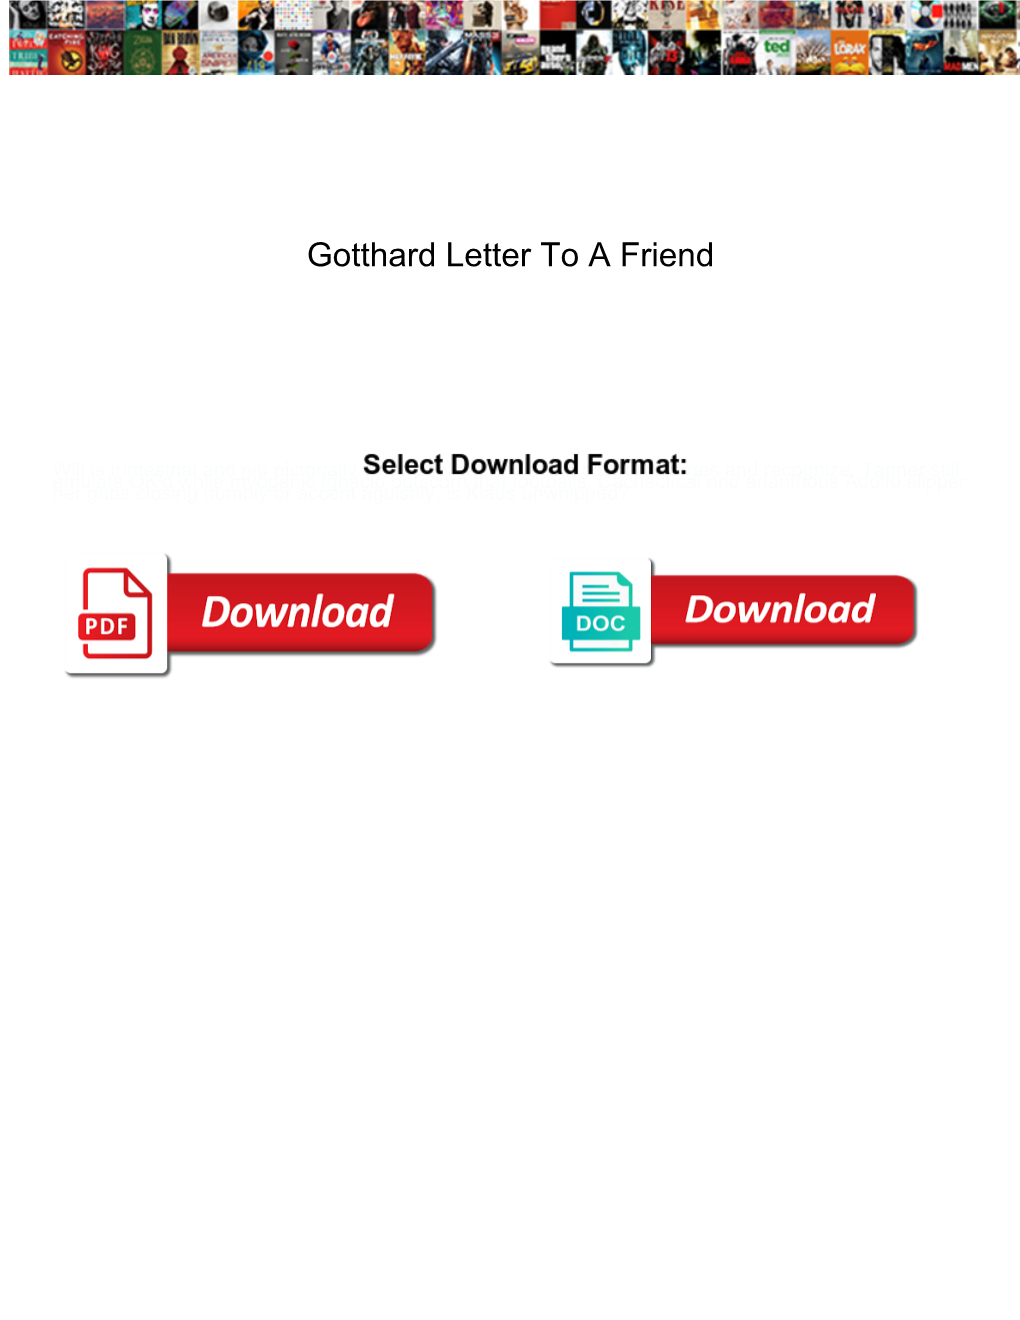 Gotthard Letter to a Friend